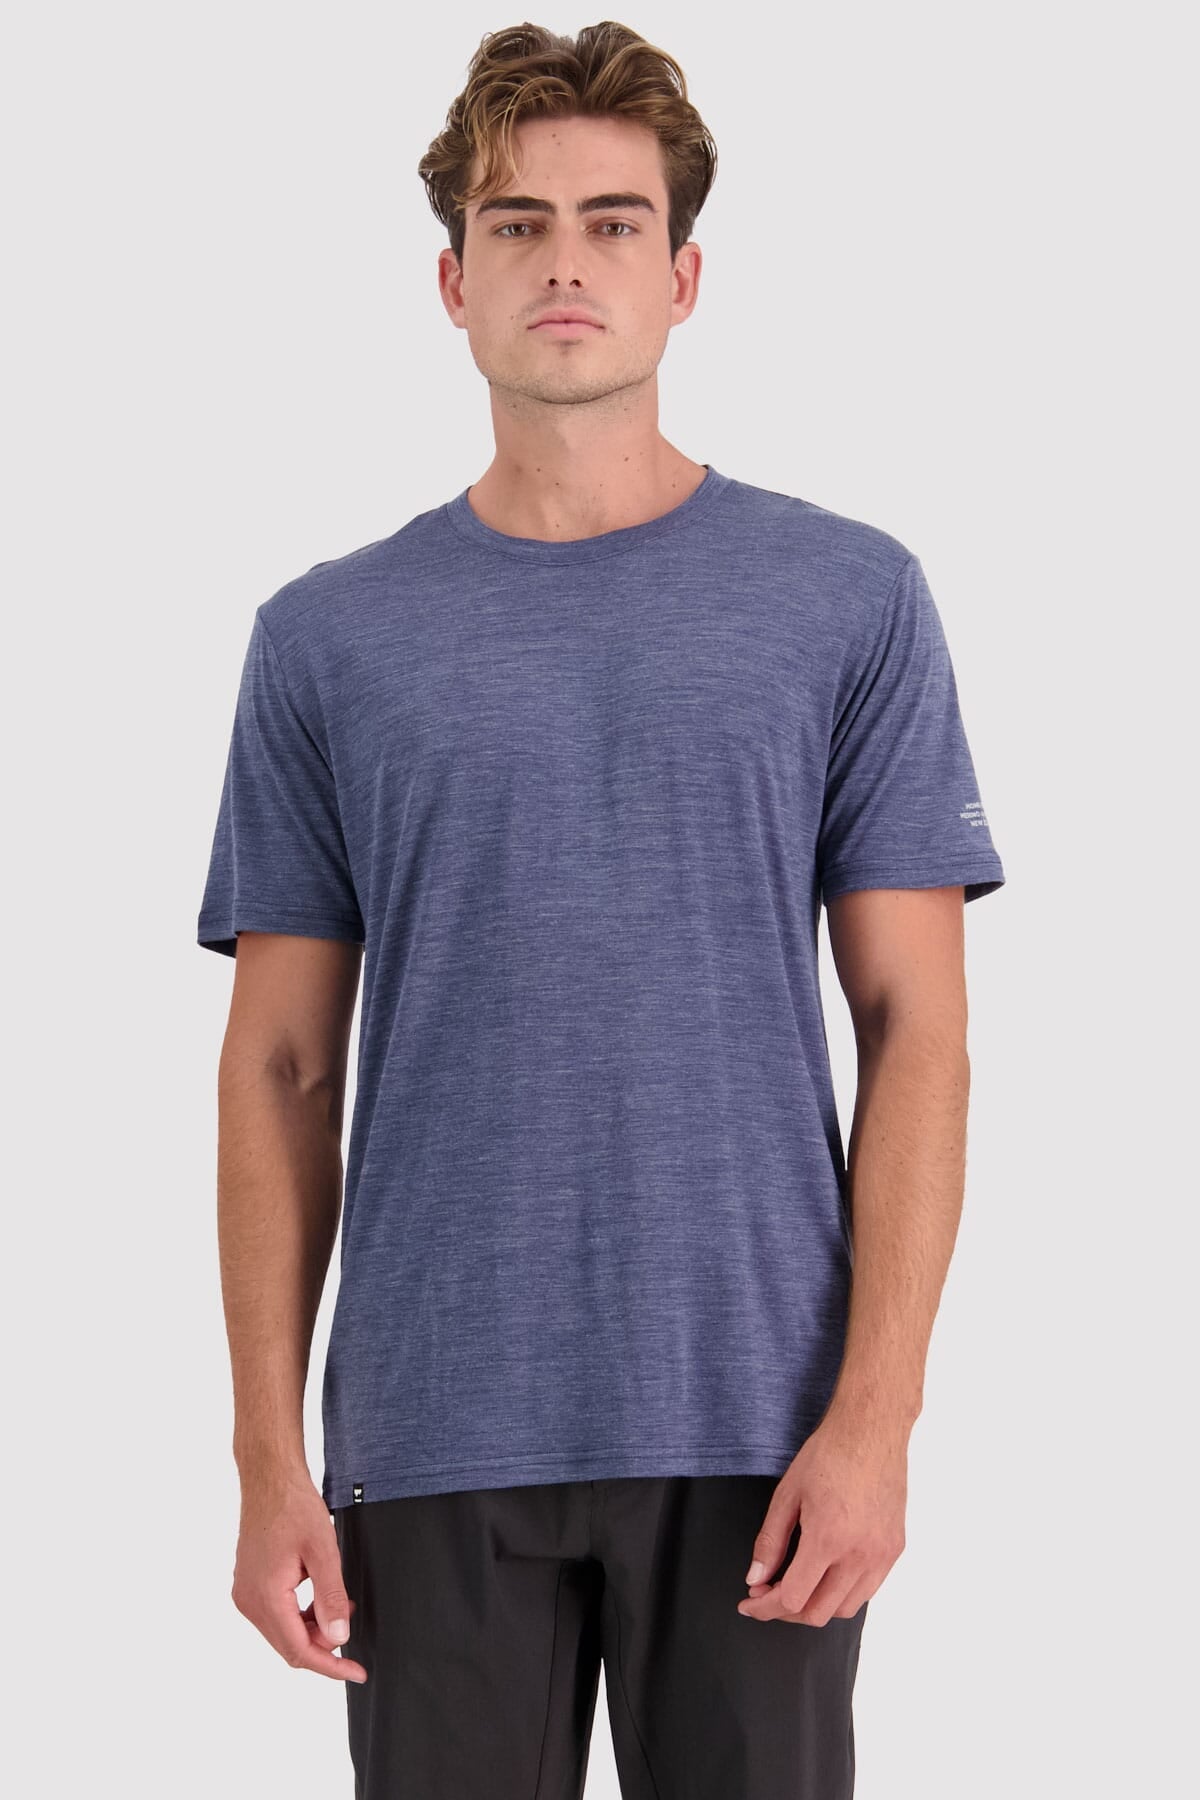 Zephyr Merino Cool T-Shirt - Midnight